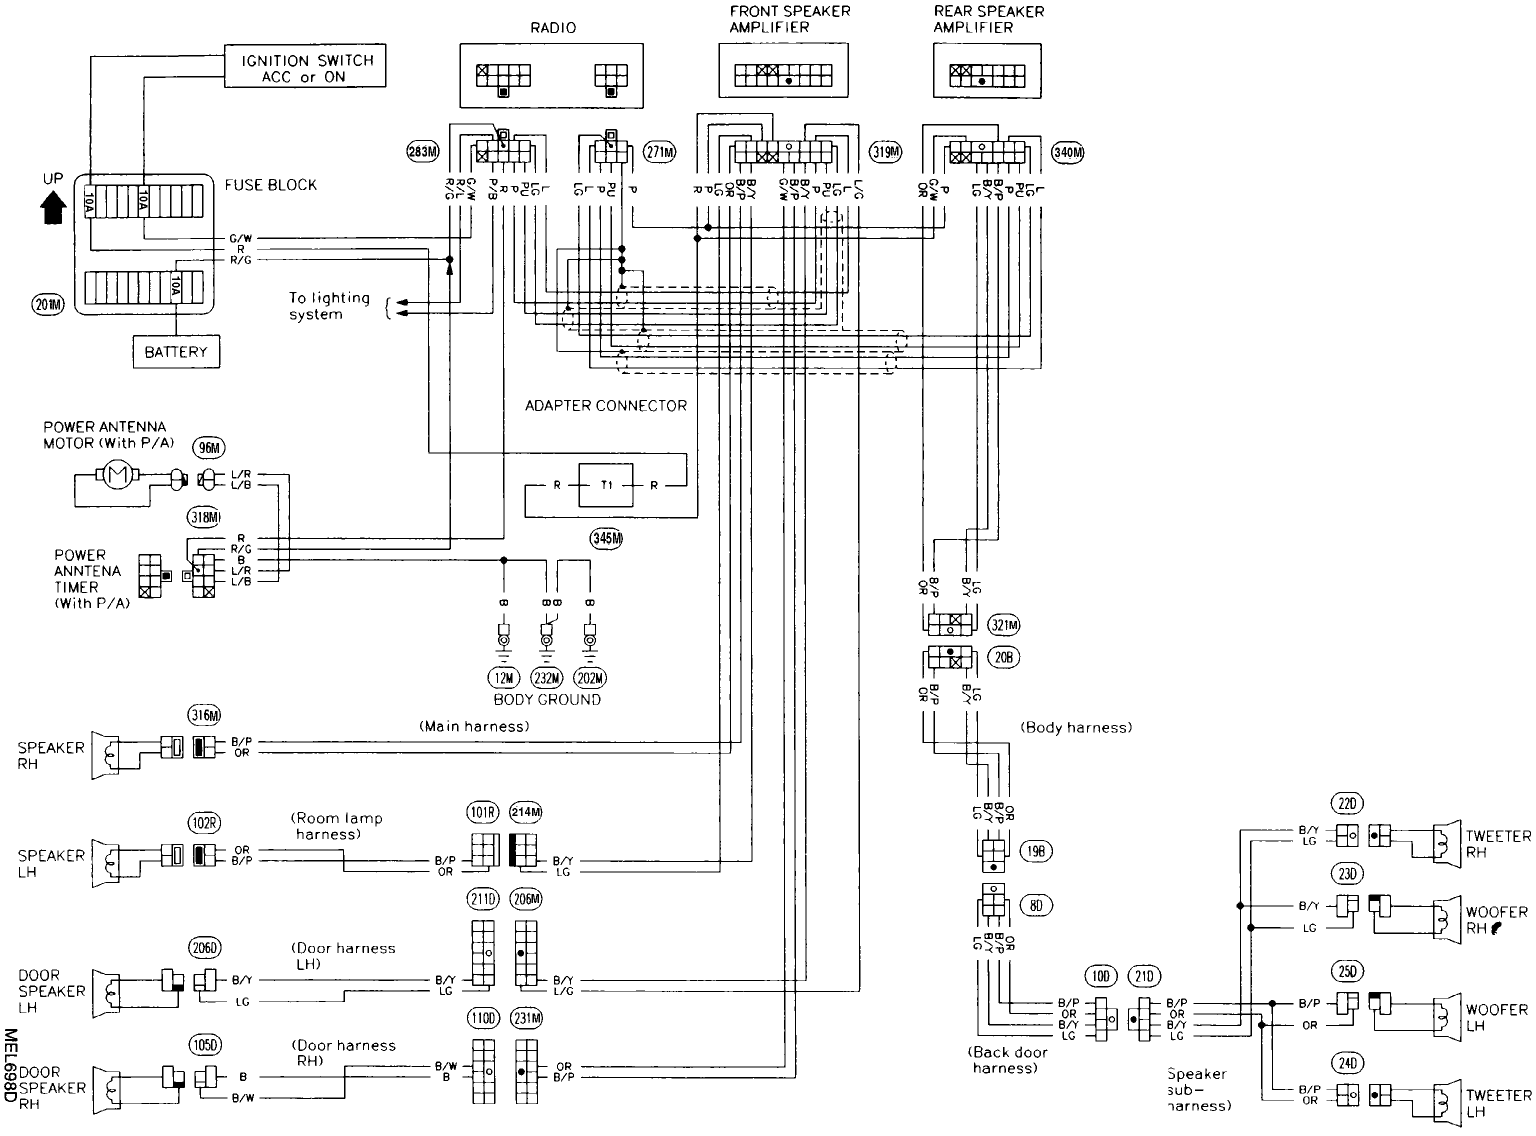 1996 Nissan Pathfinder Stereo Wiring Diagram - Wiring Diagram